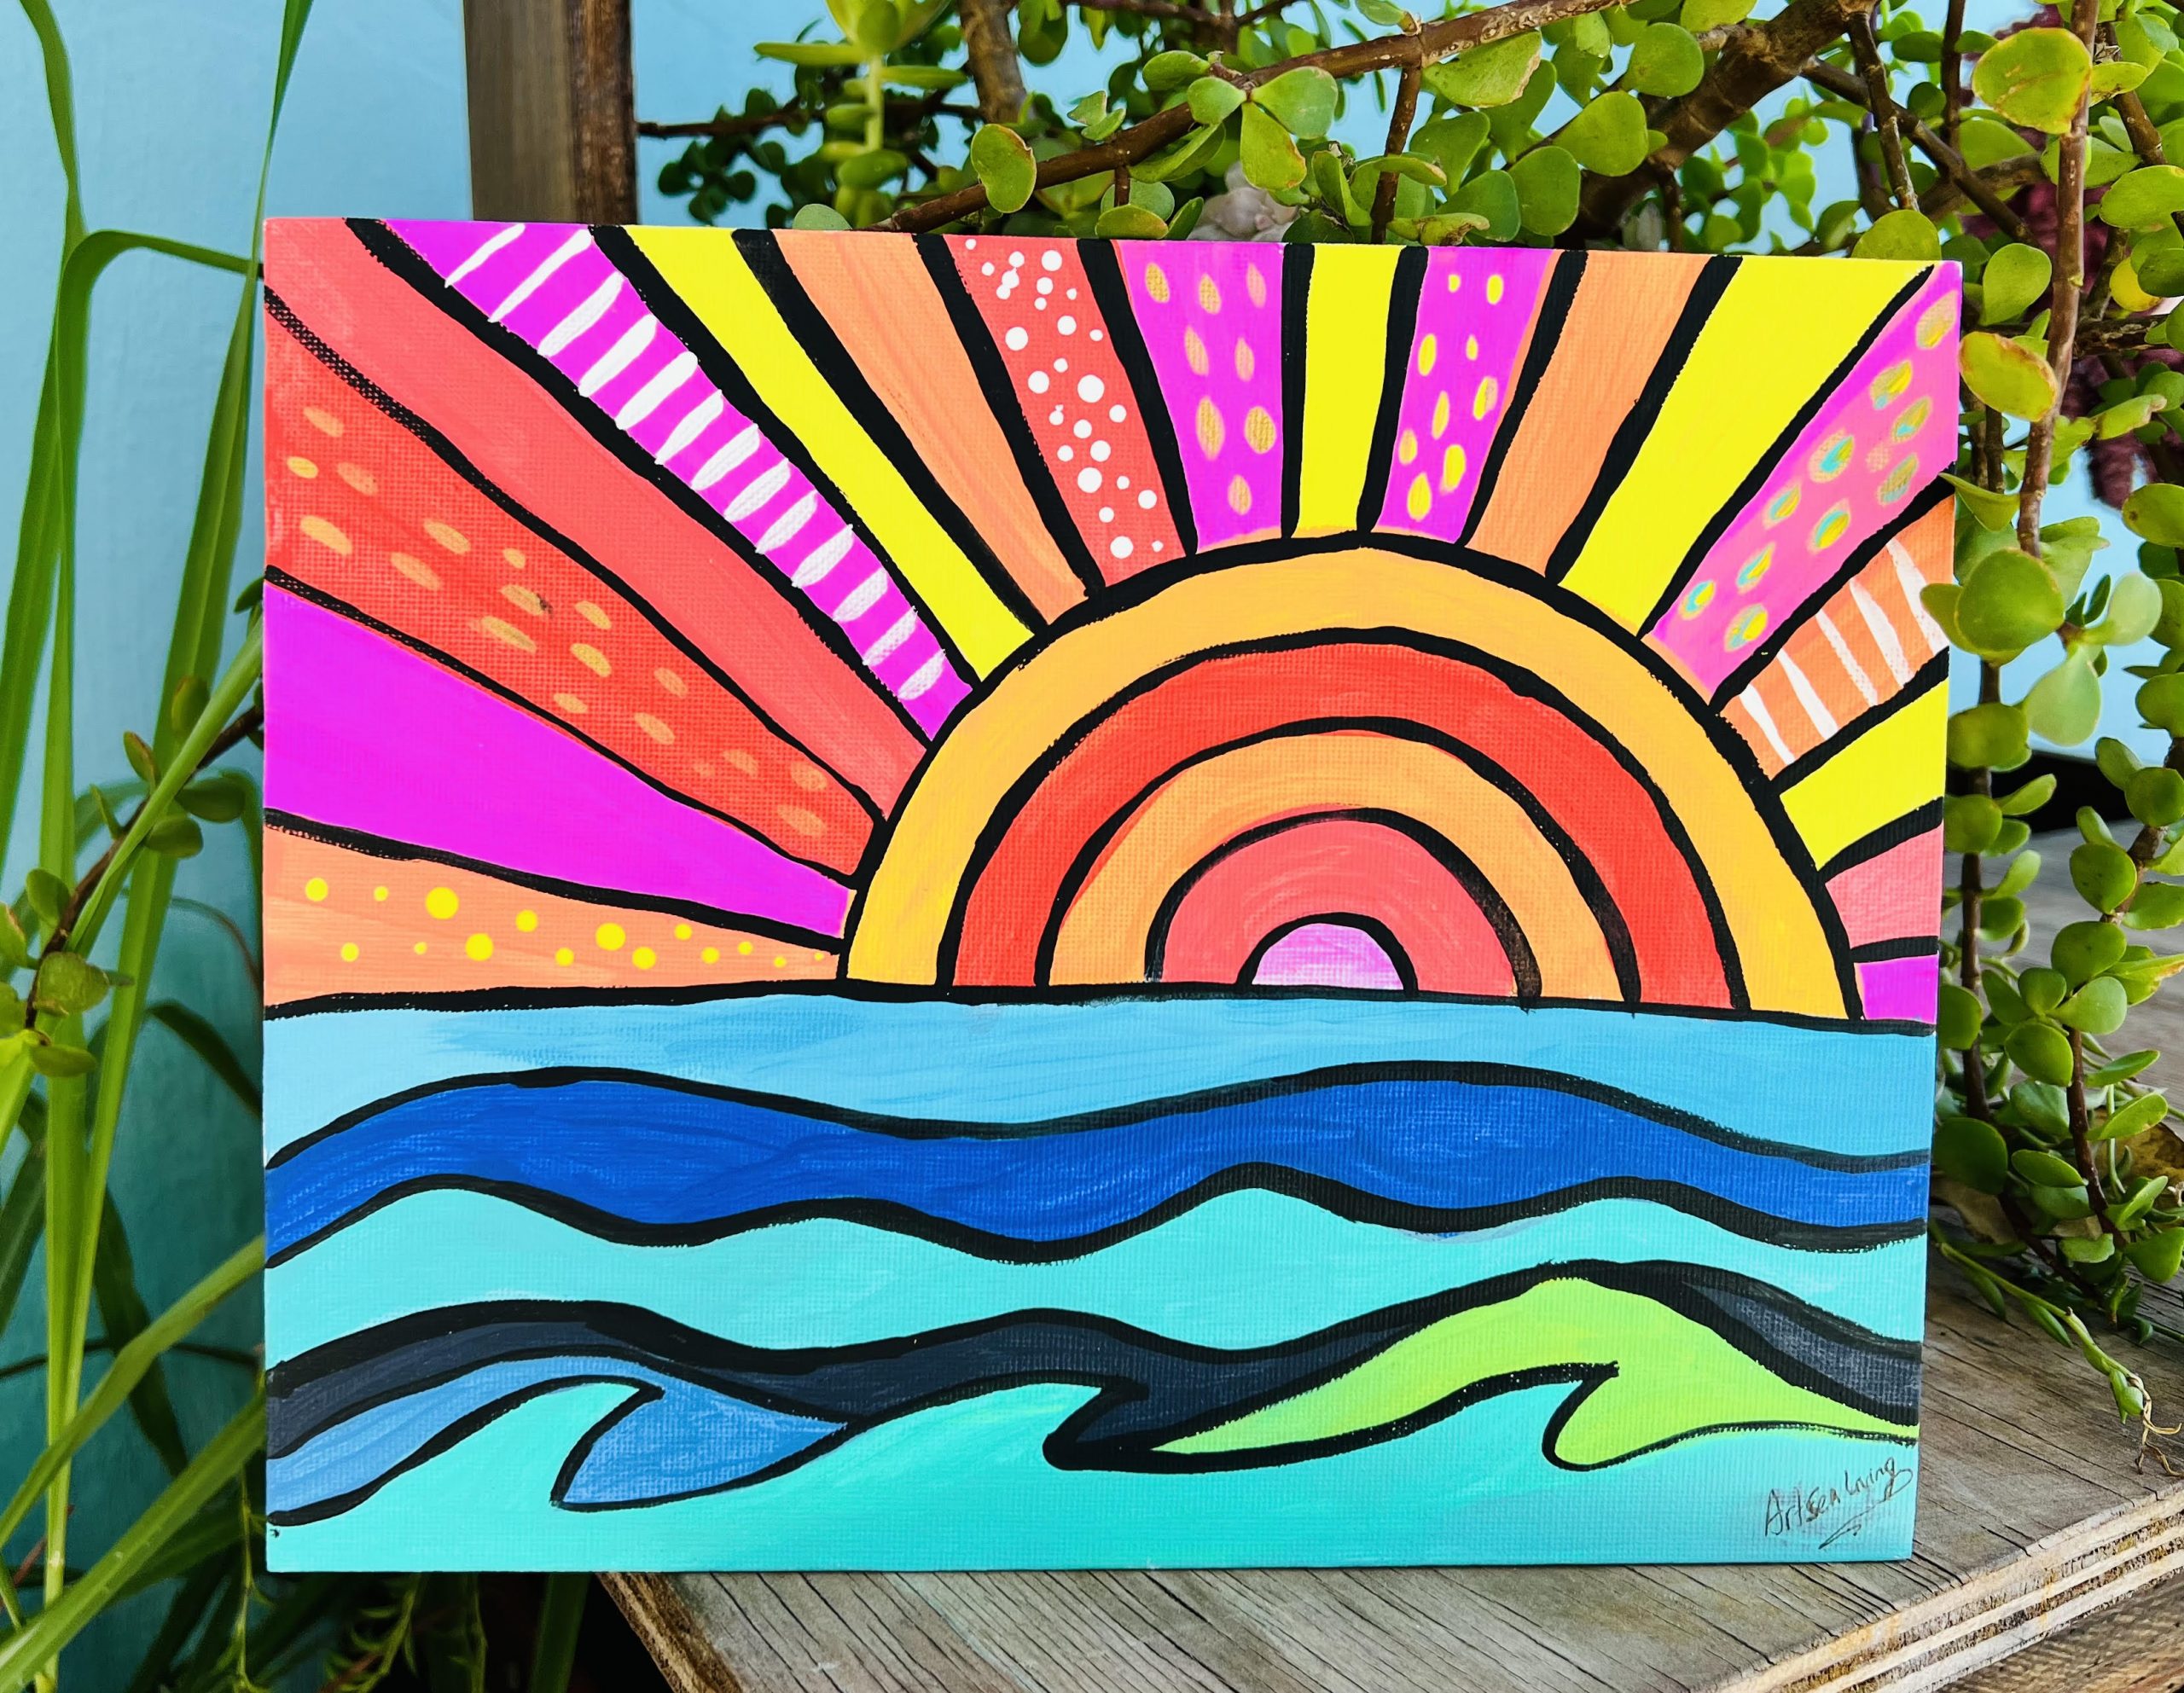 Fun Sunset Painting Class at ArtSea Living. Acrylic on Canvas at ArtSea Living in Boynton Beach FLORIDA. BYOB Paint & Sip